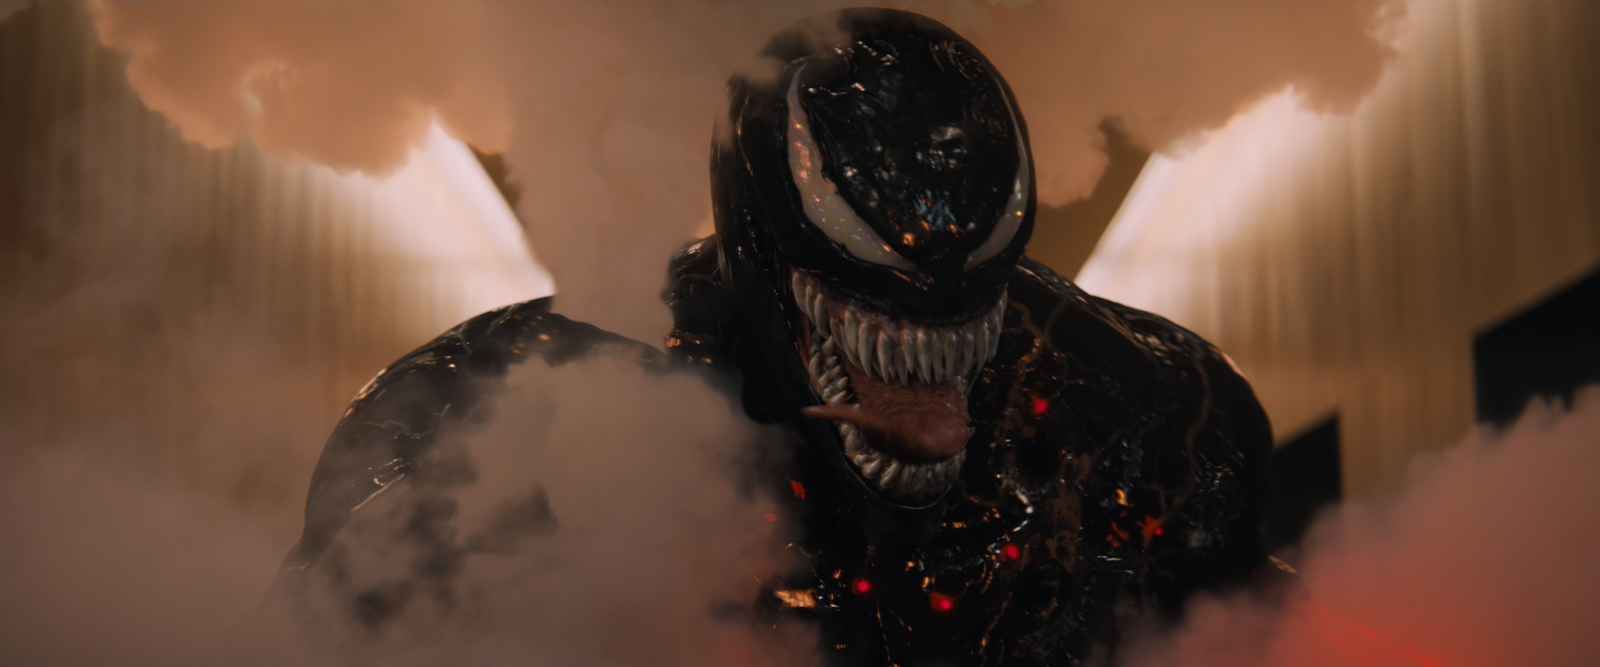 Download Film Venom (2018) Bluray MKV 480p 720p 1080p Sub Indo